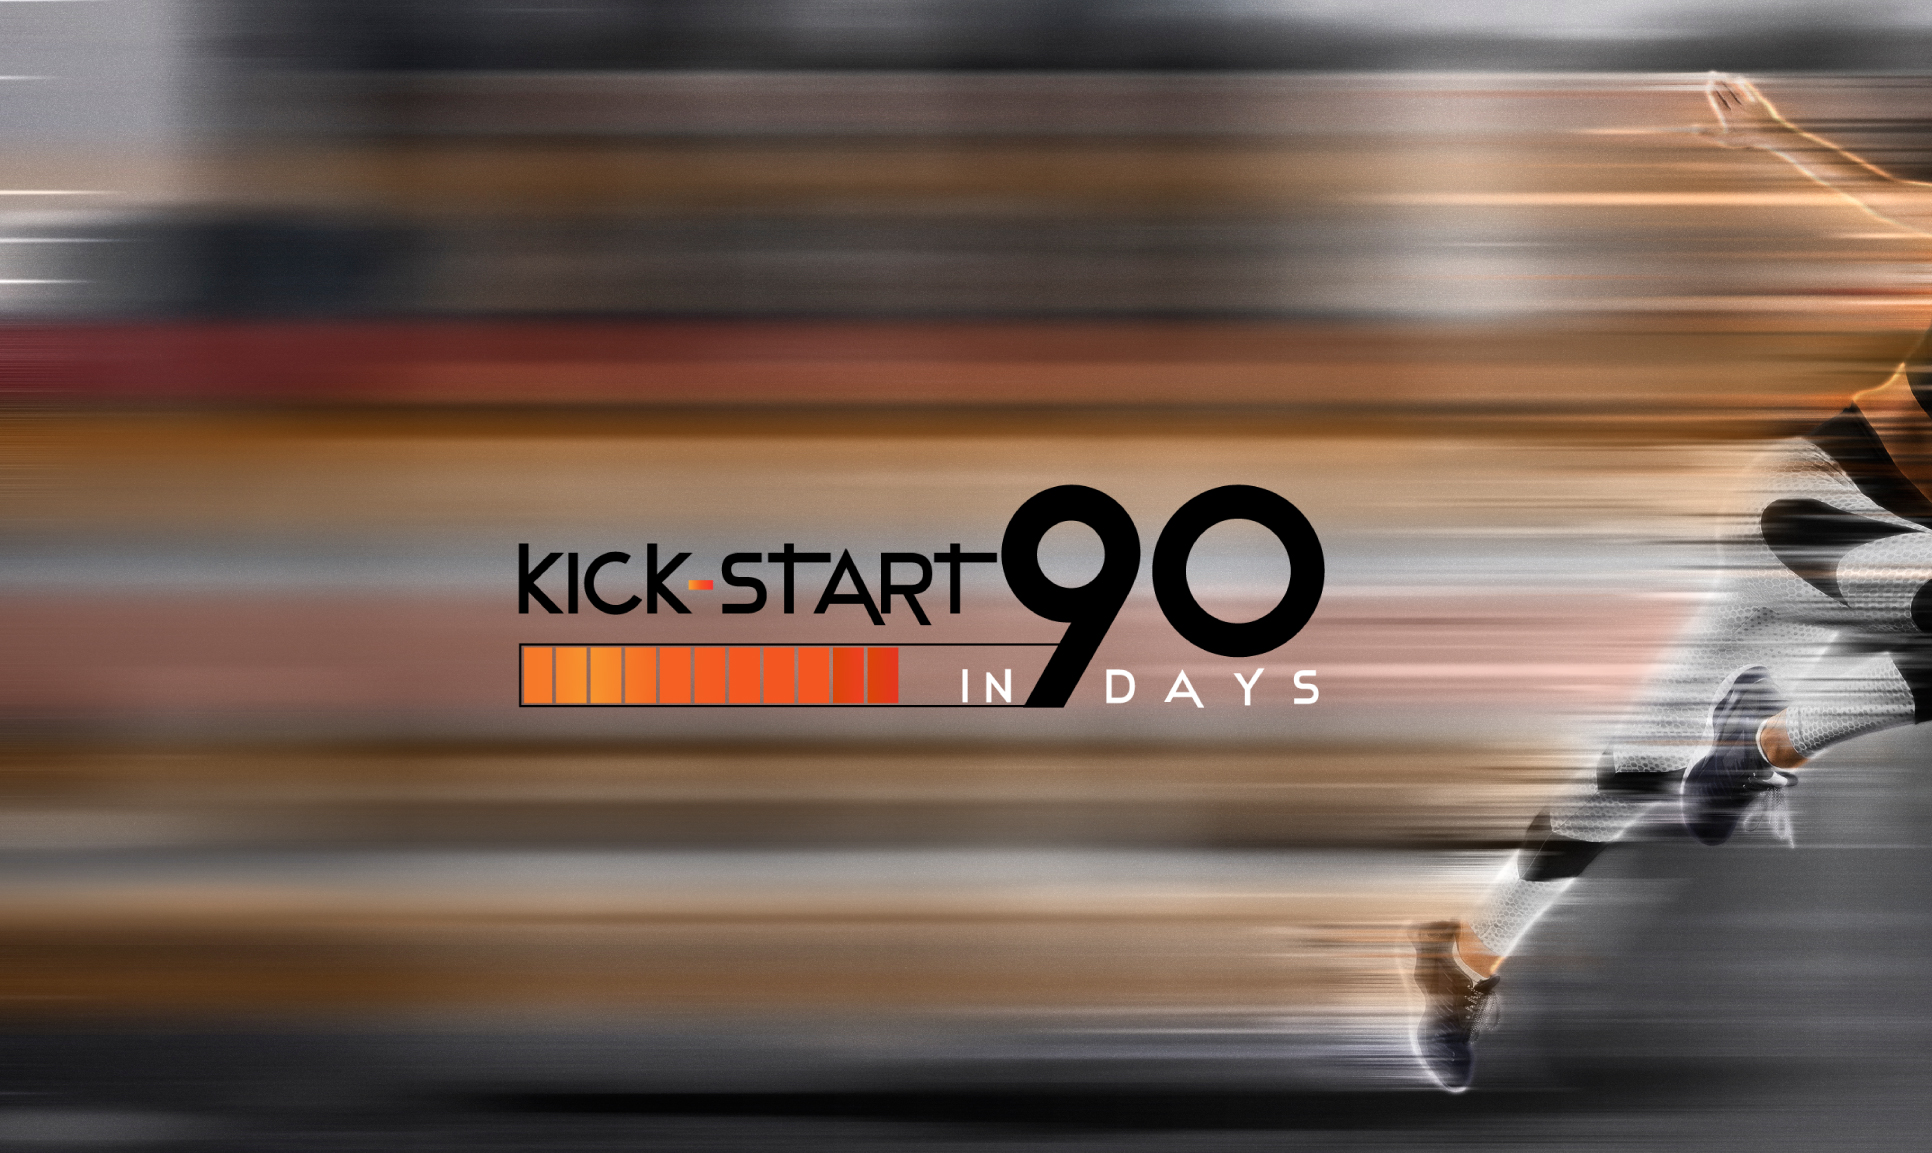 KICK-START in 90 days